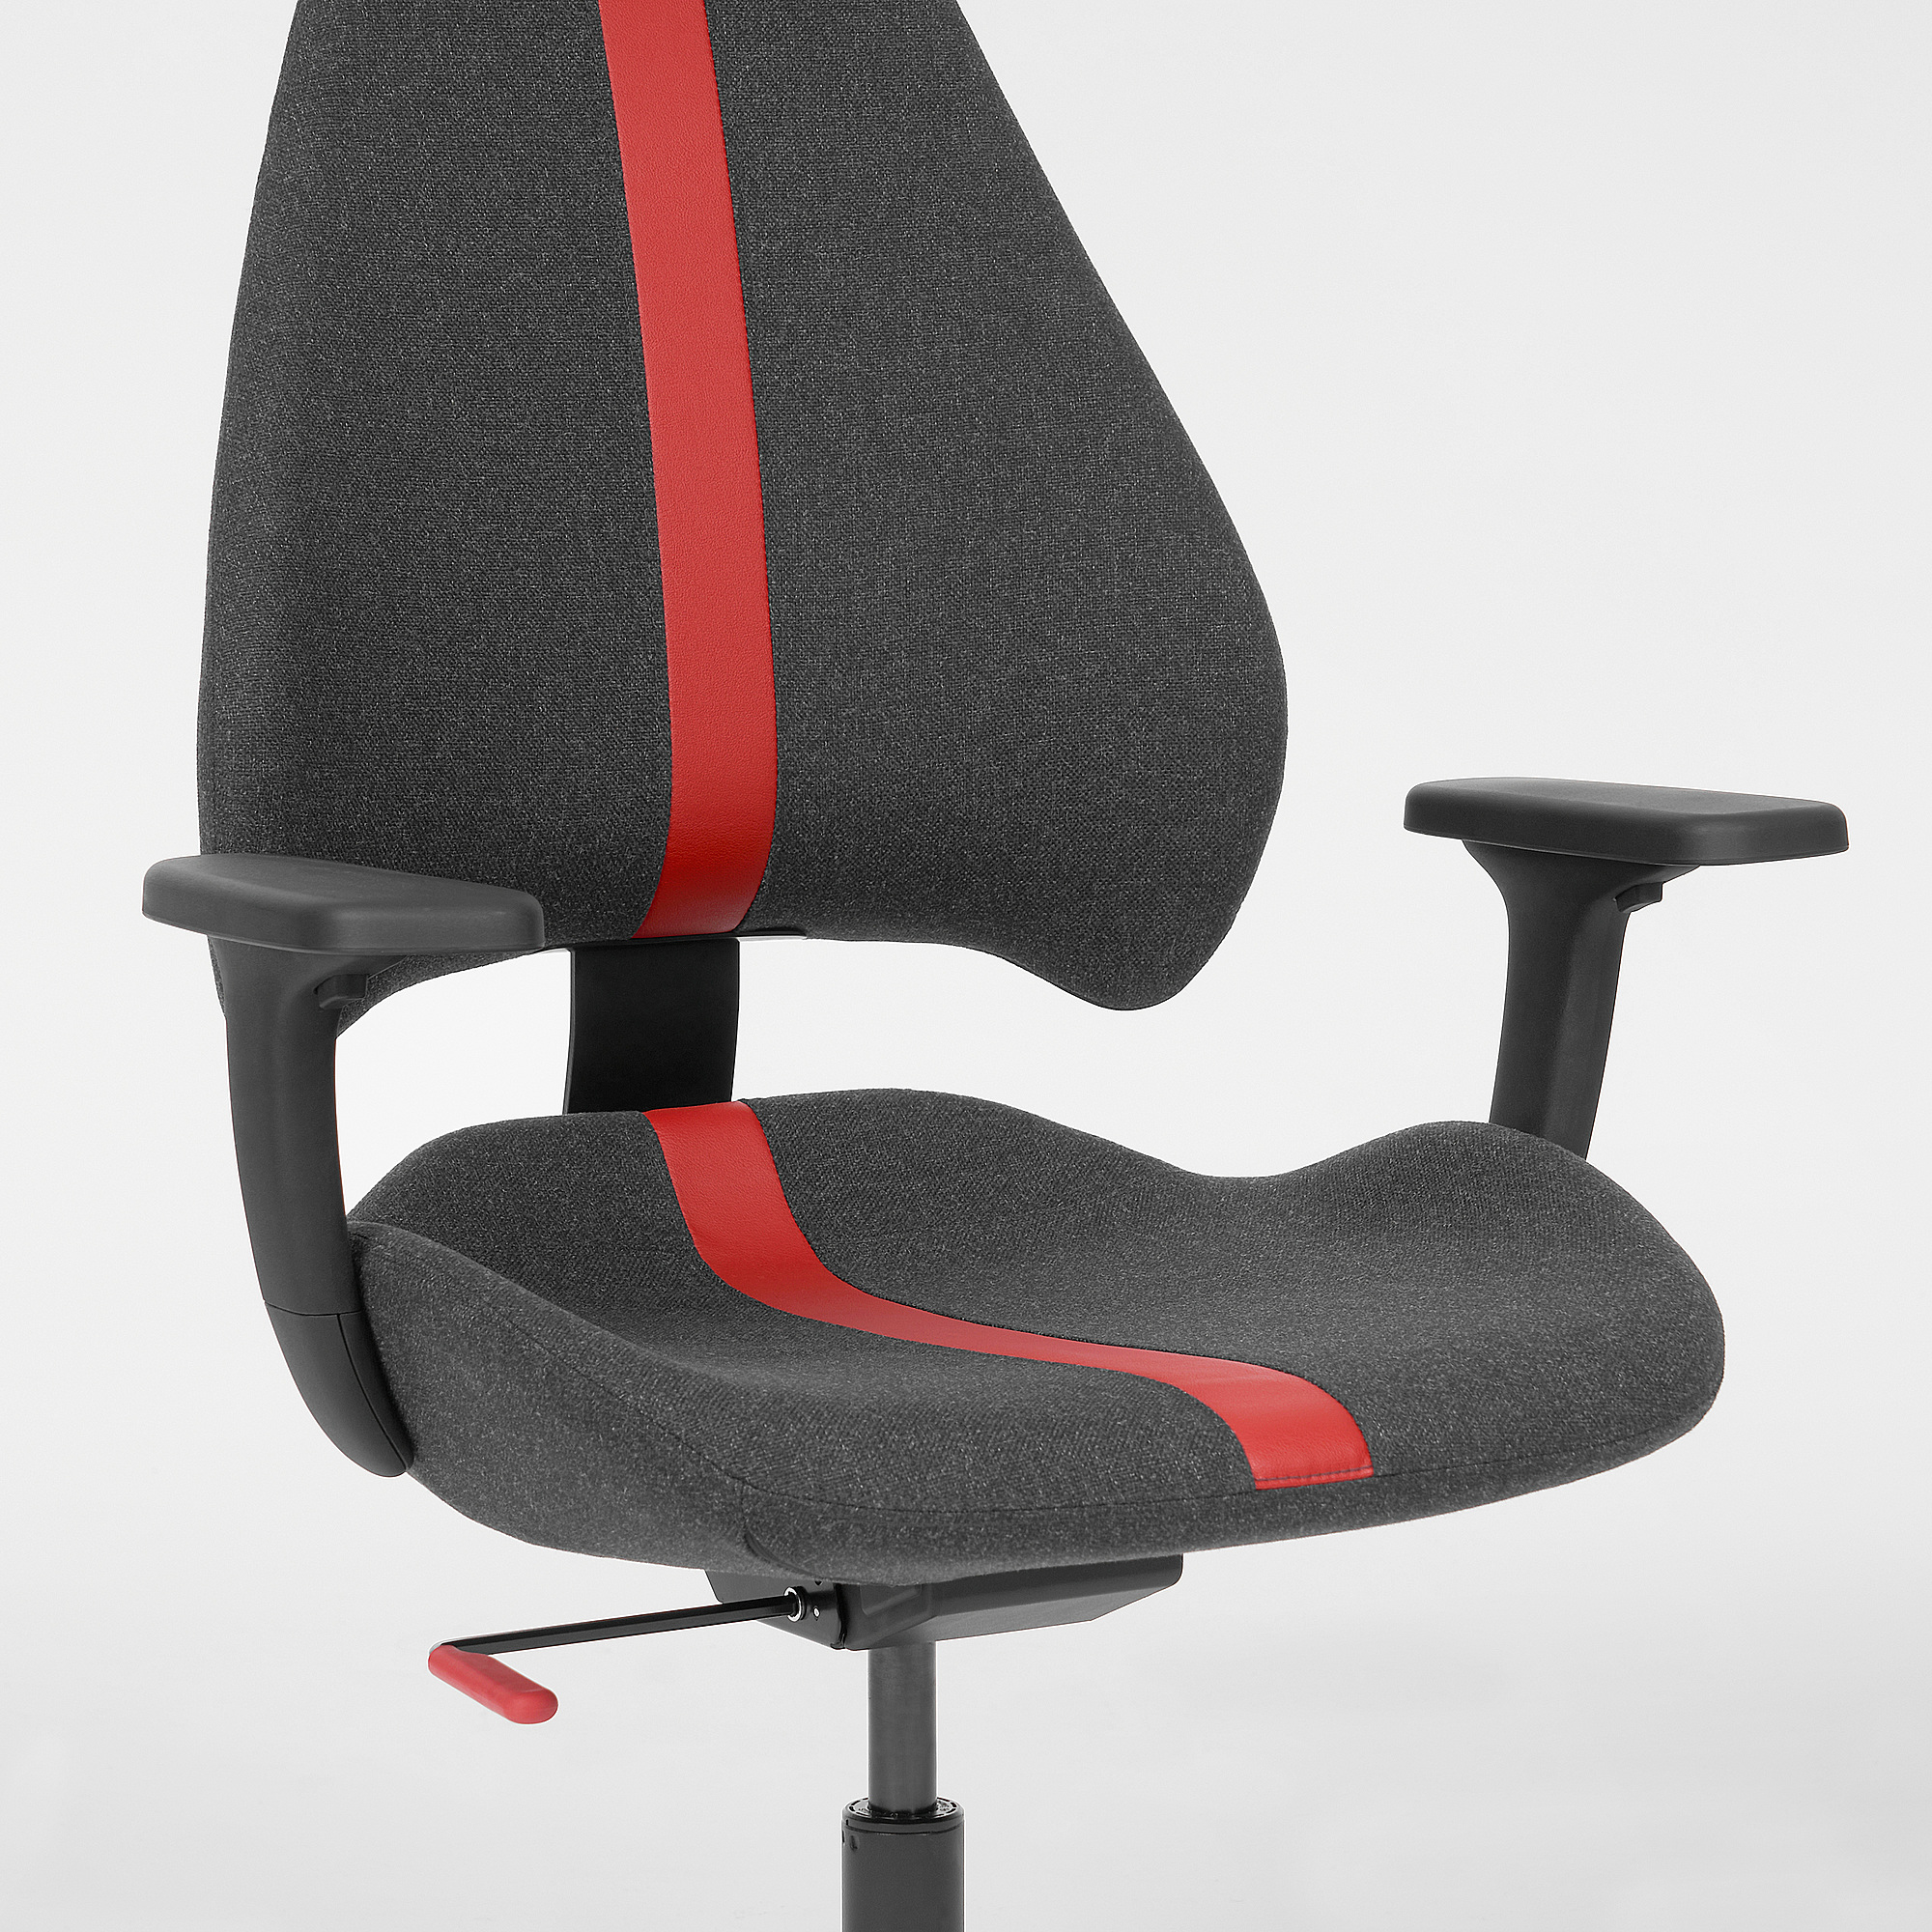 GRUPPSPEL gaming chair